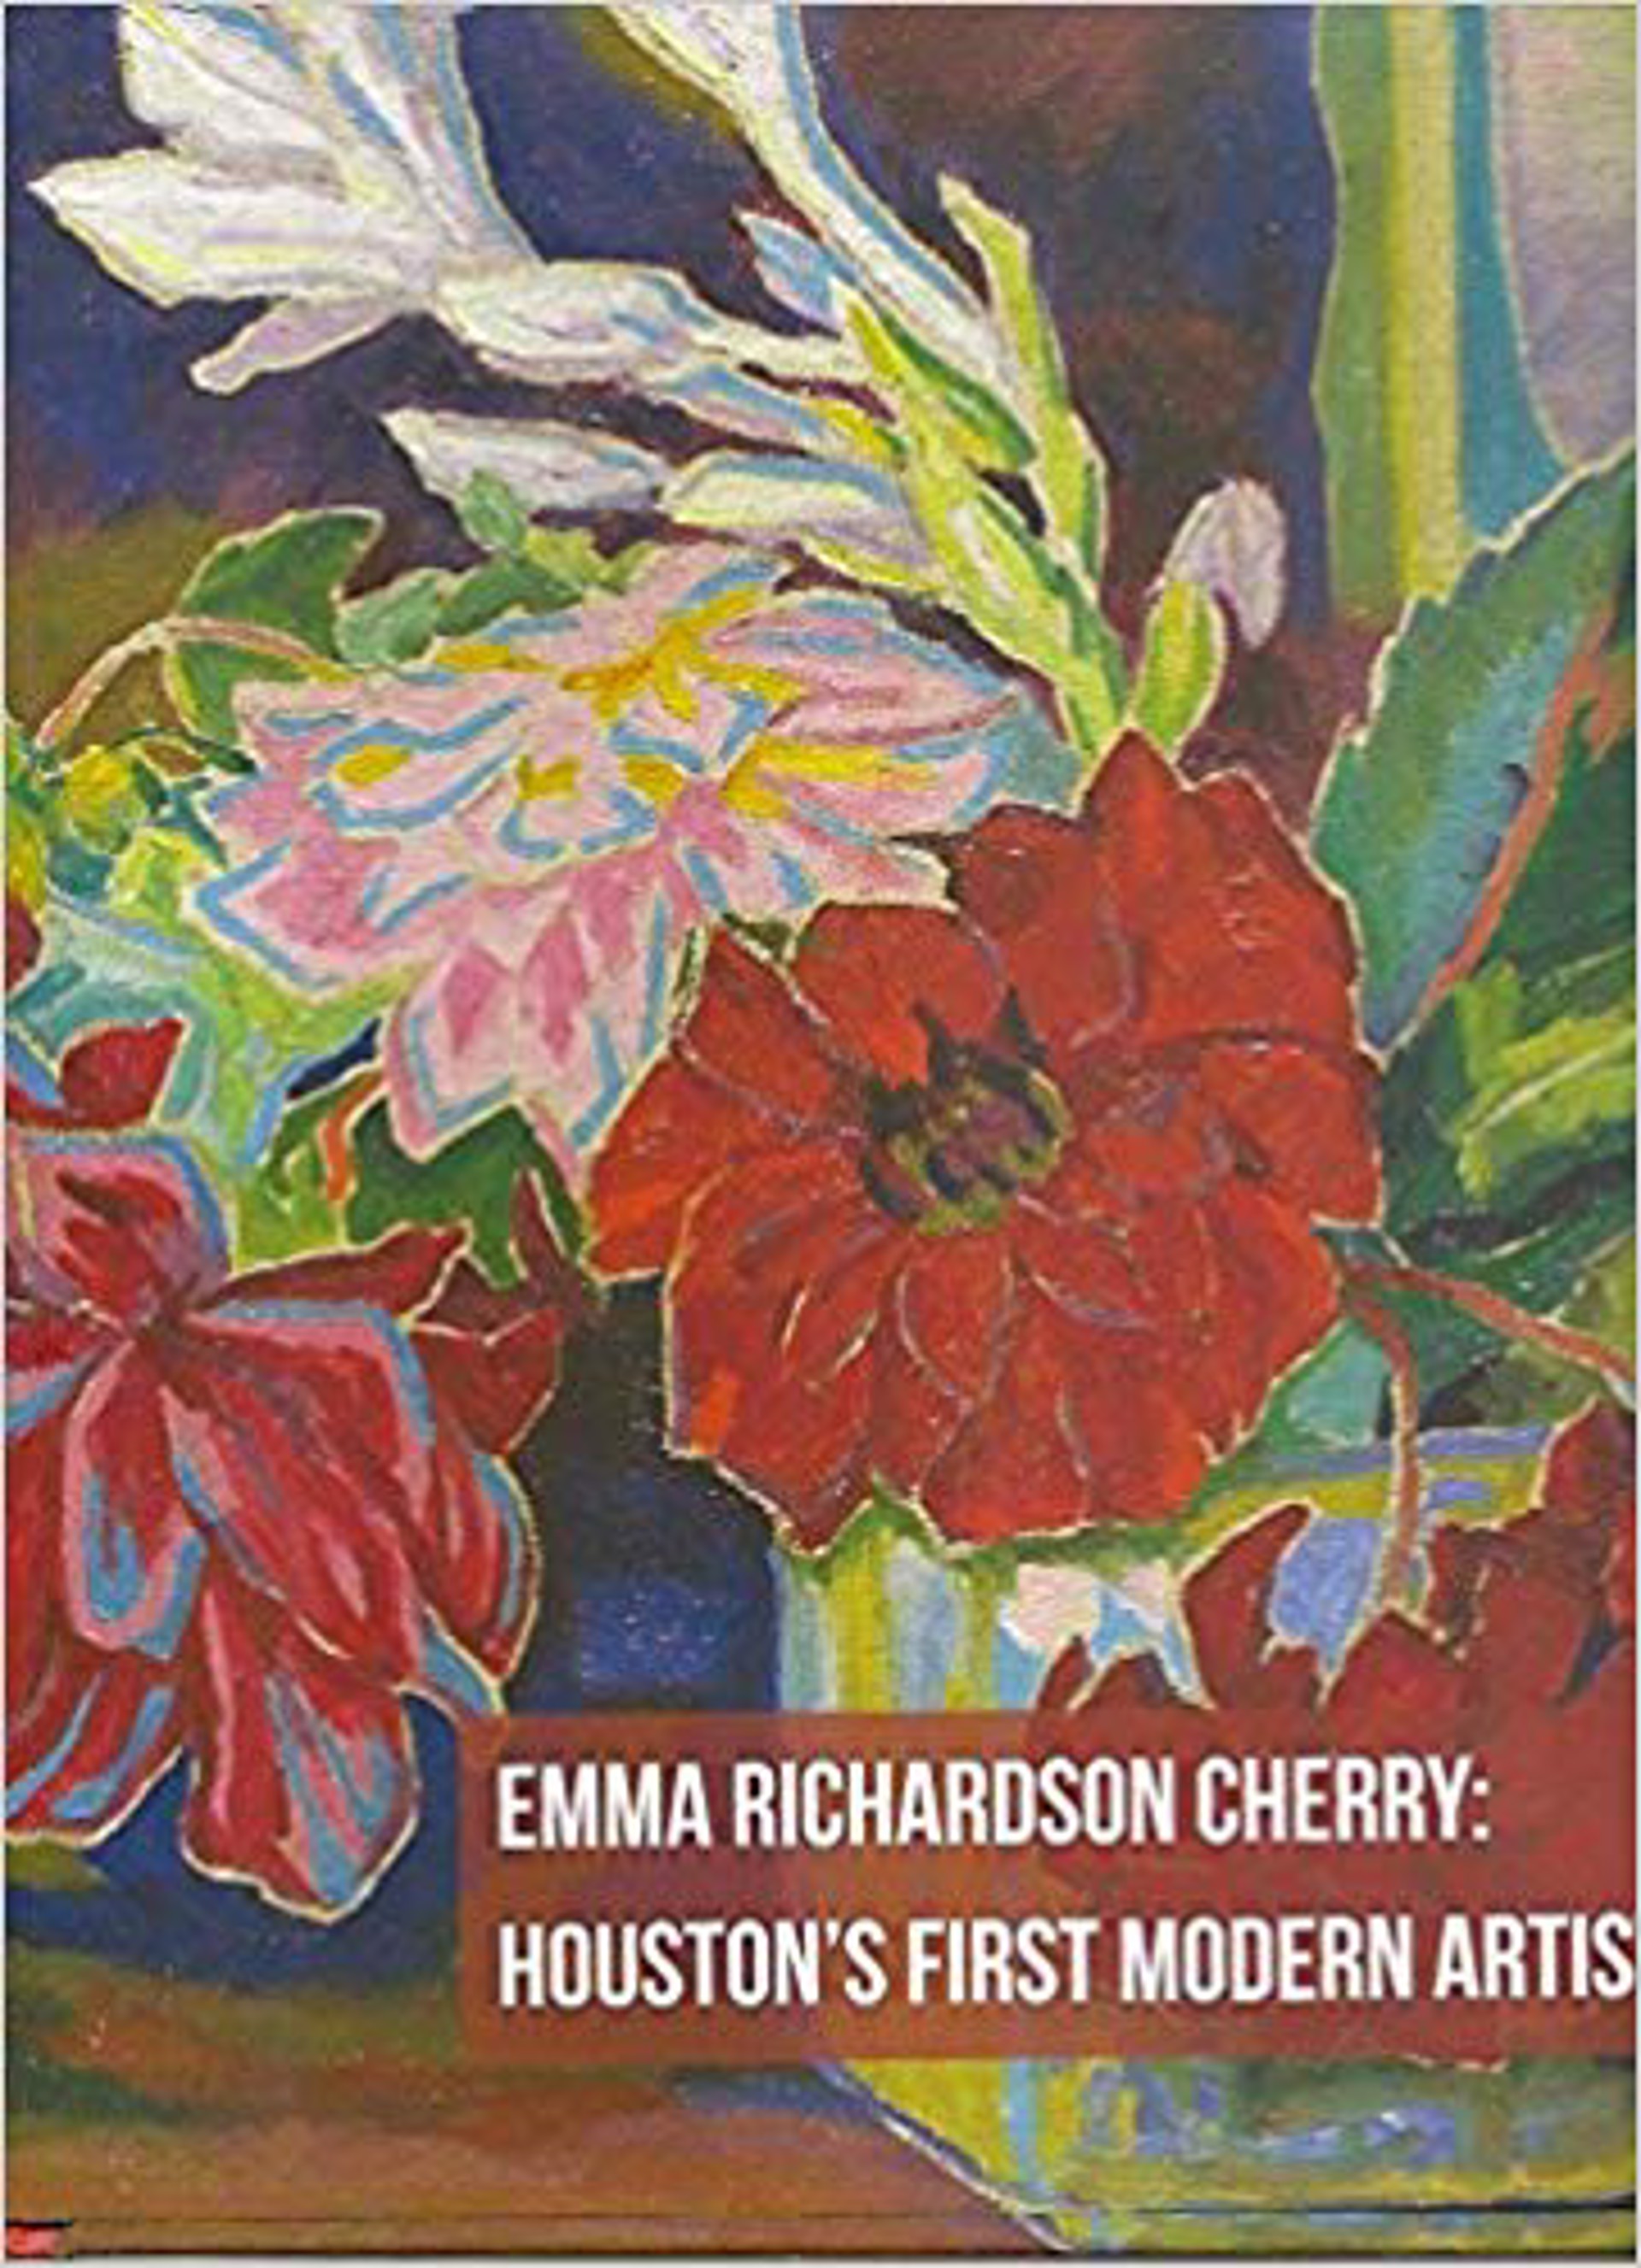 Emma Richardson Cherry: Houston's First Modern Artist by Publications